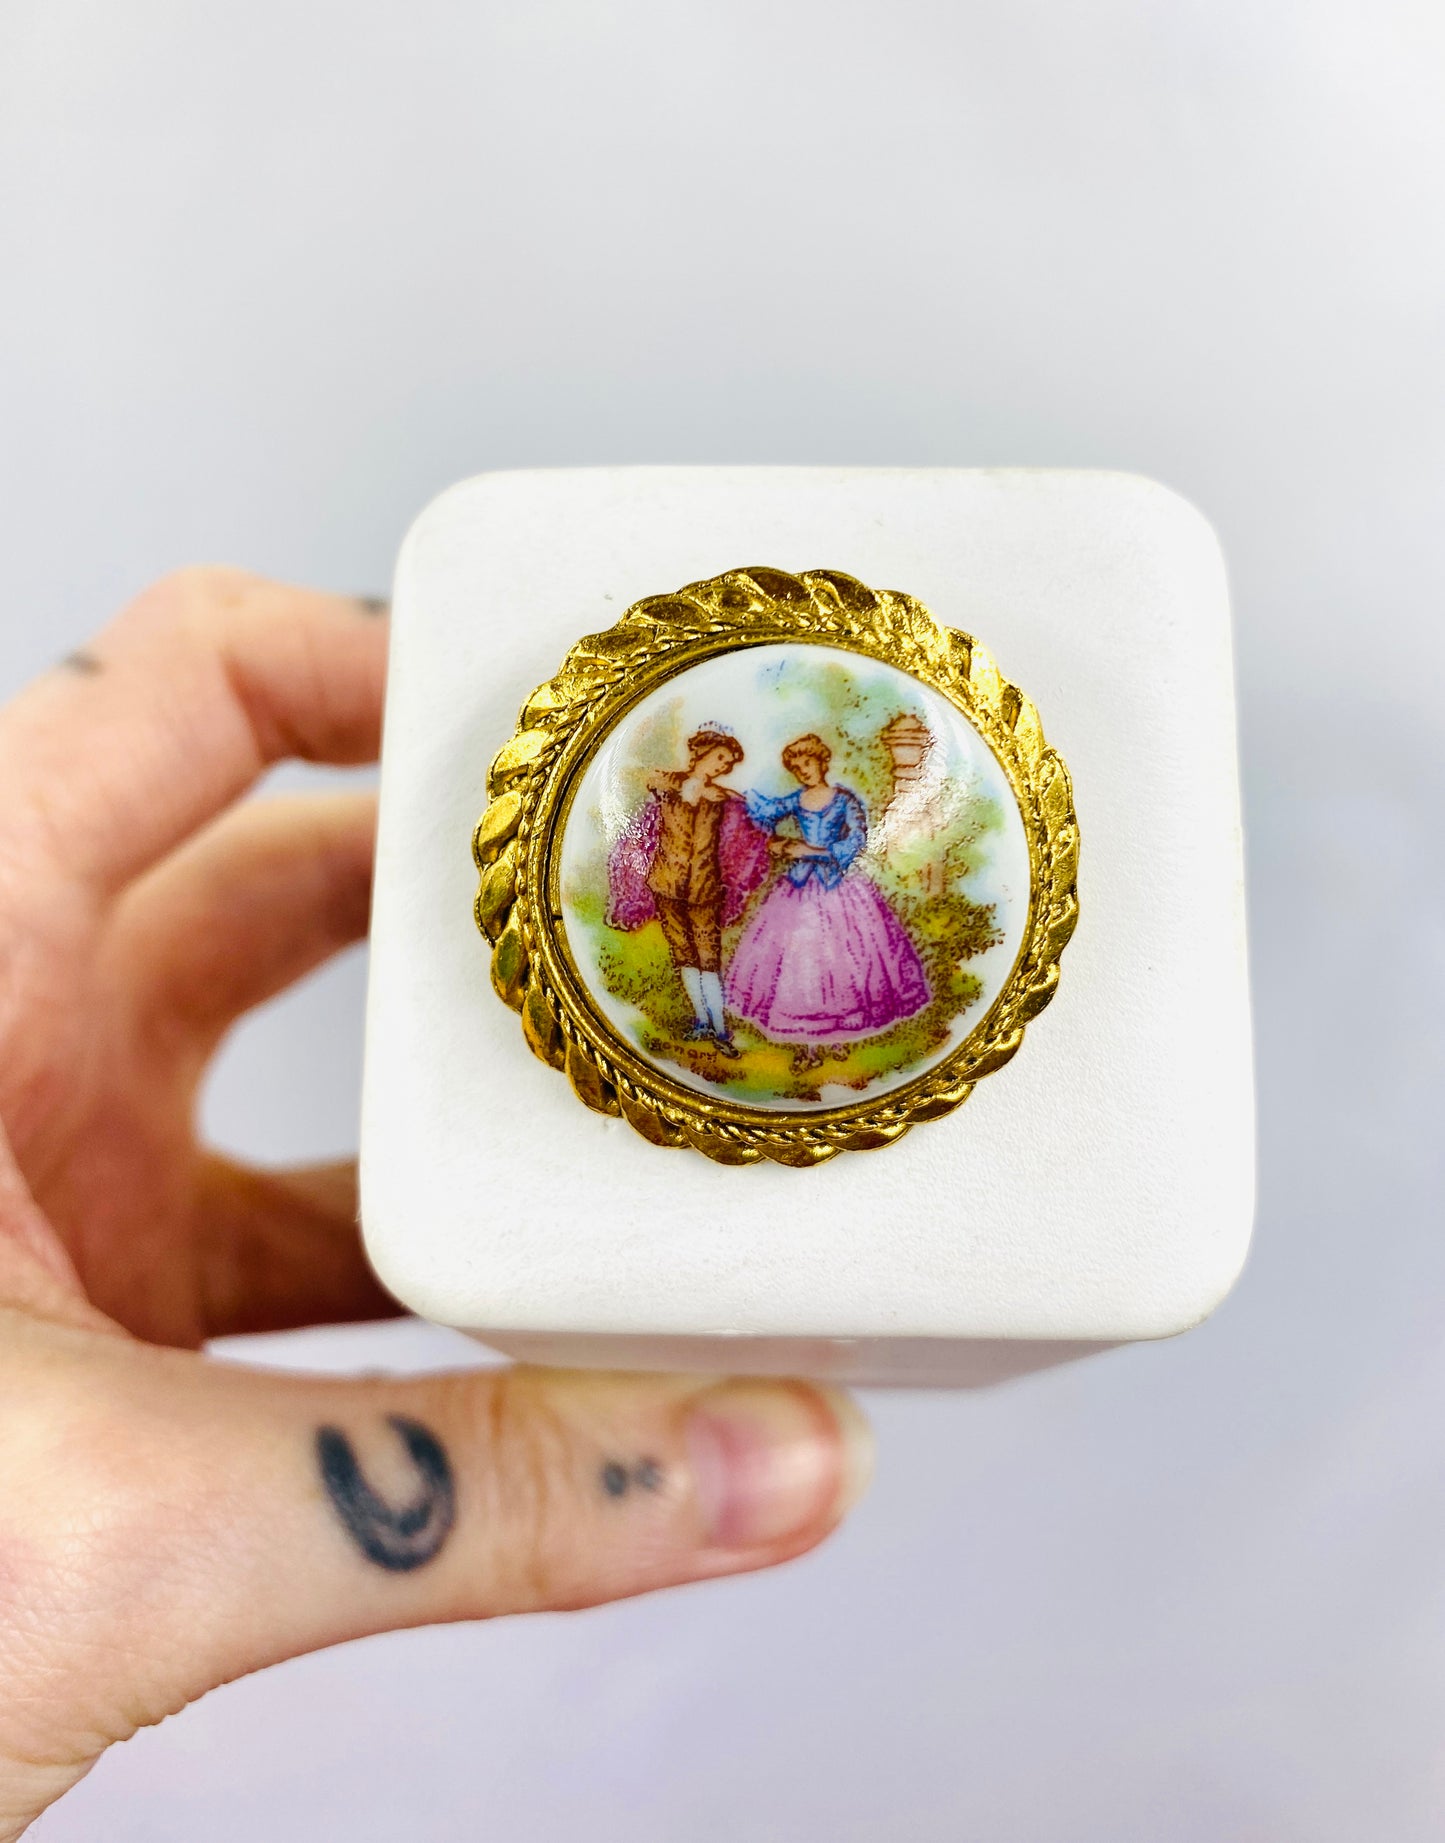 Vintage Painted Ceramic Round Brooch, Miniature Courtship Scene